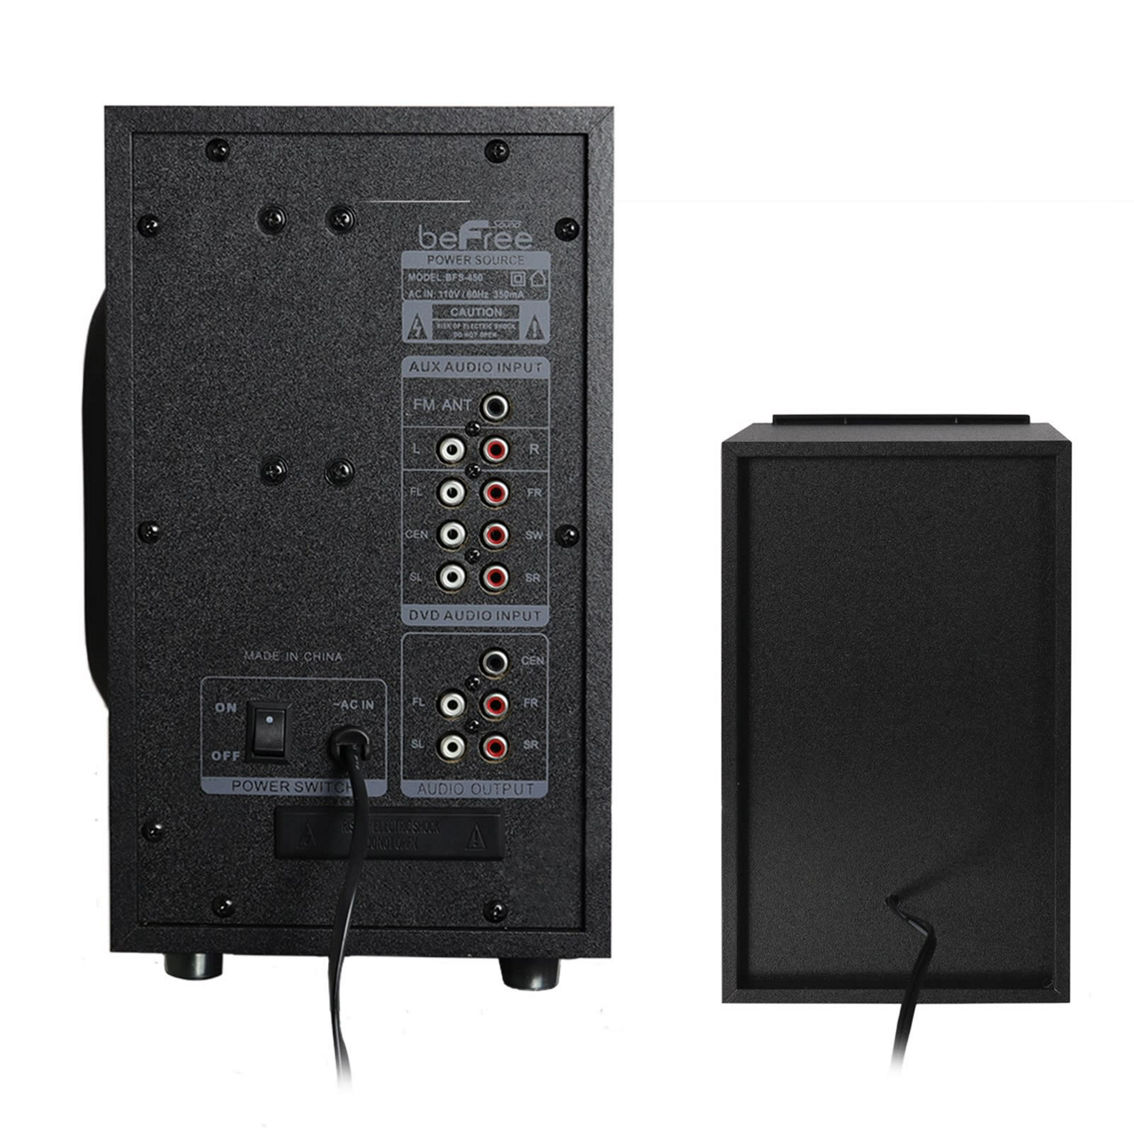 beFree Sound 5.1 Channel Bluetooth Surround Sound Speaker System in Black - Image 5 of 5